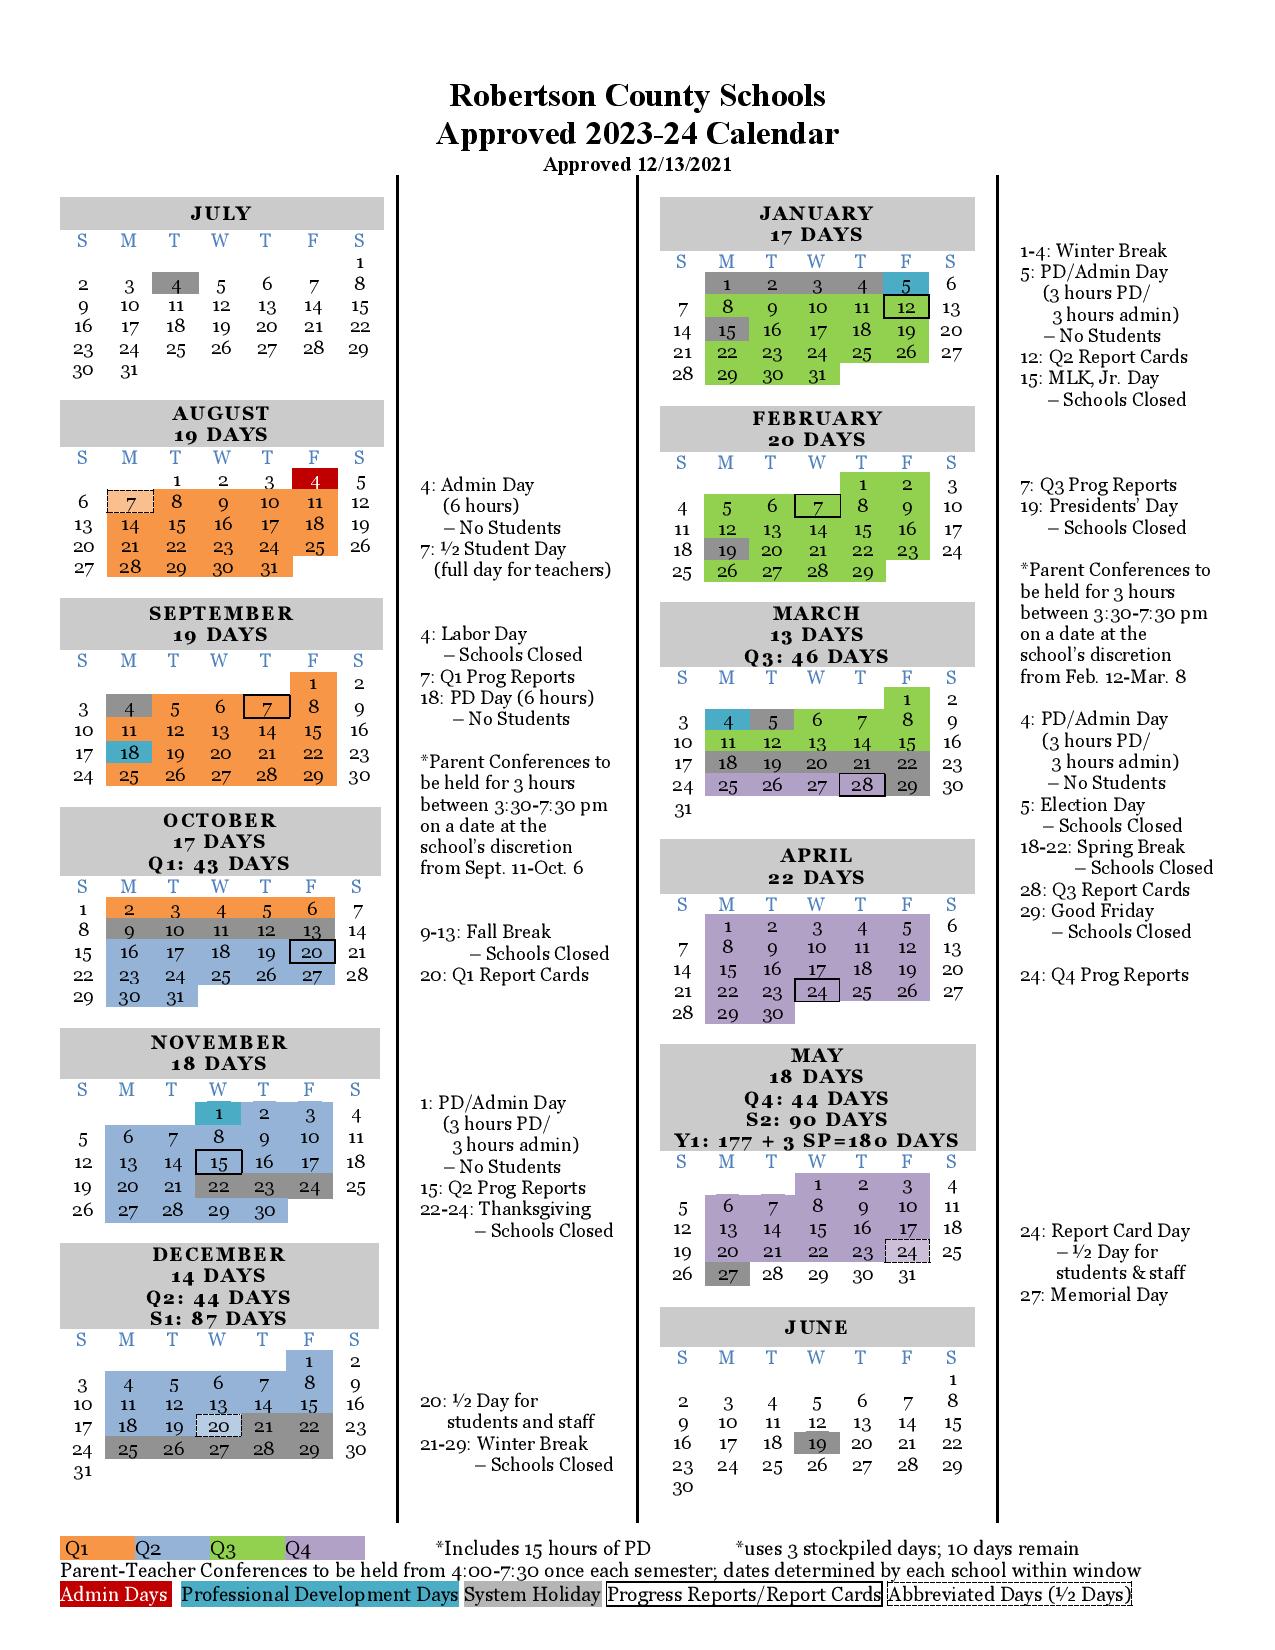 Robertson County Schools Calendar 20232024 in PDF